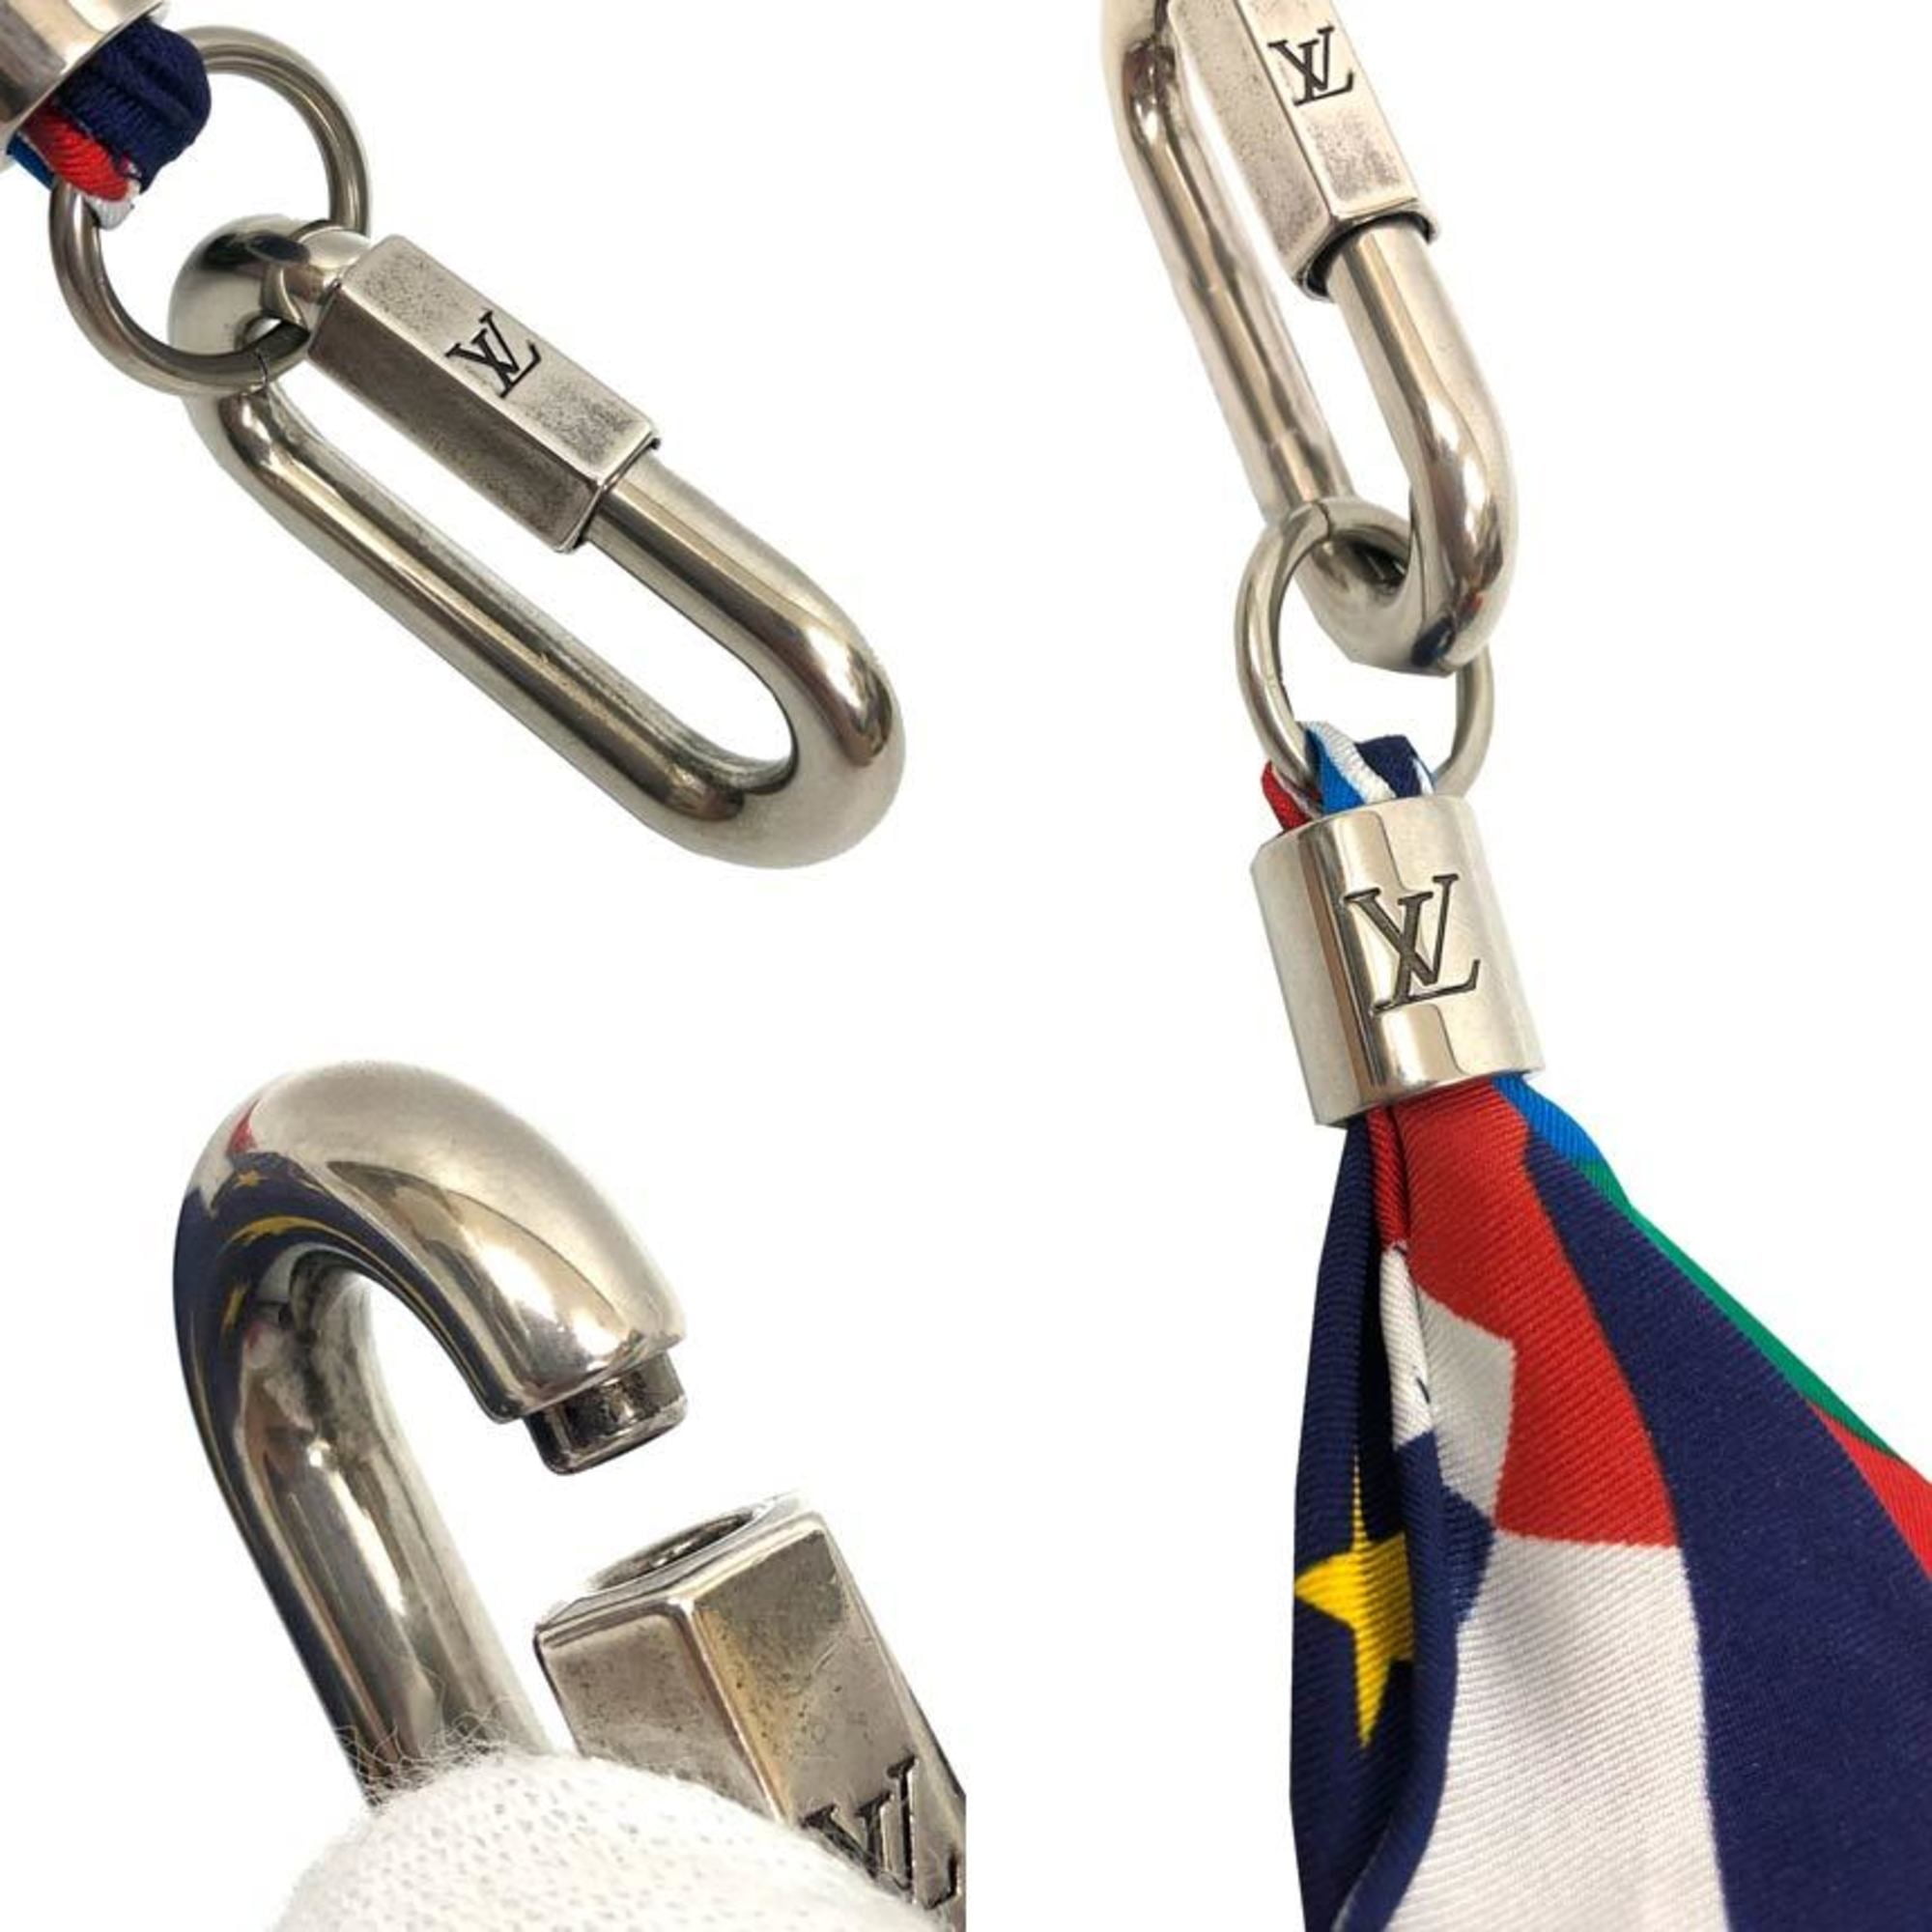 Louis Vuitton Louis Vuitton Bijoux Sac Tapage Tricolor Key Chain /